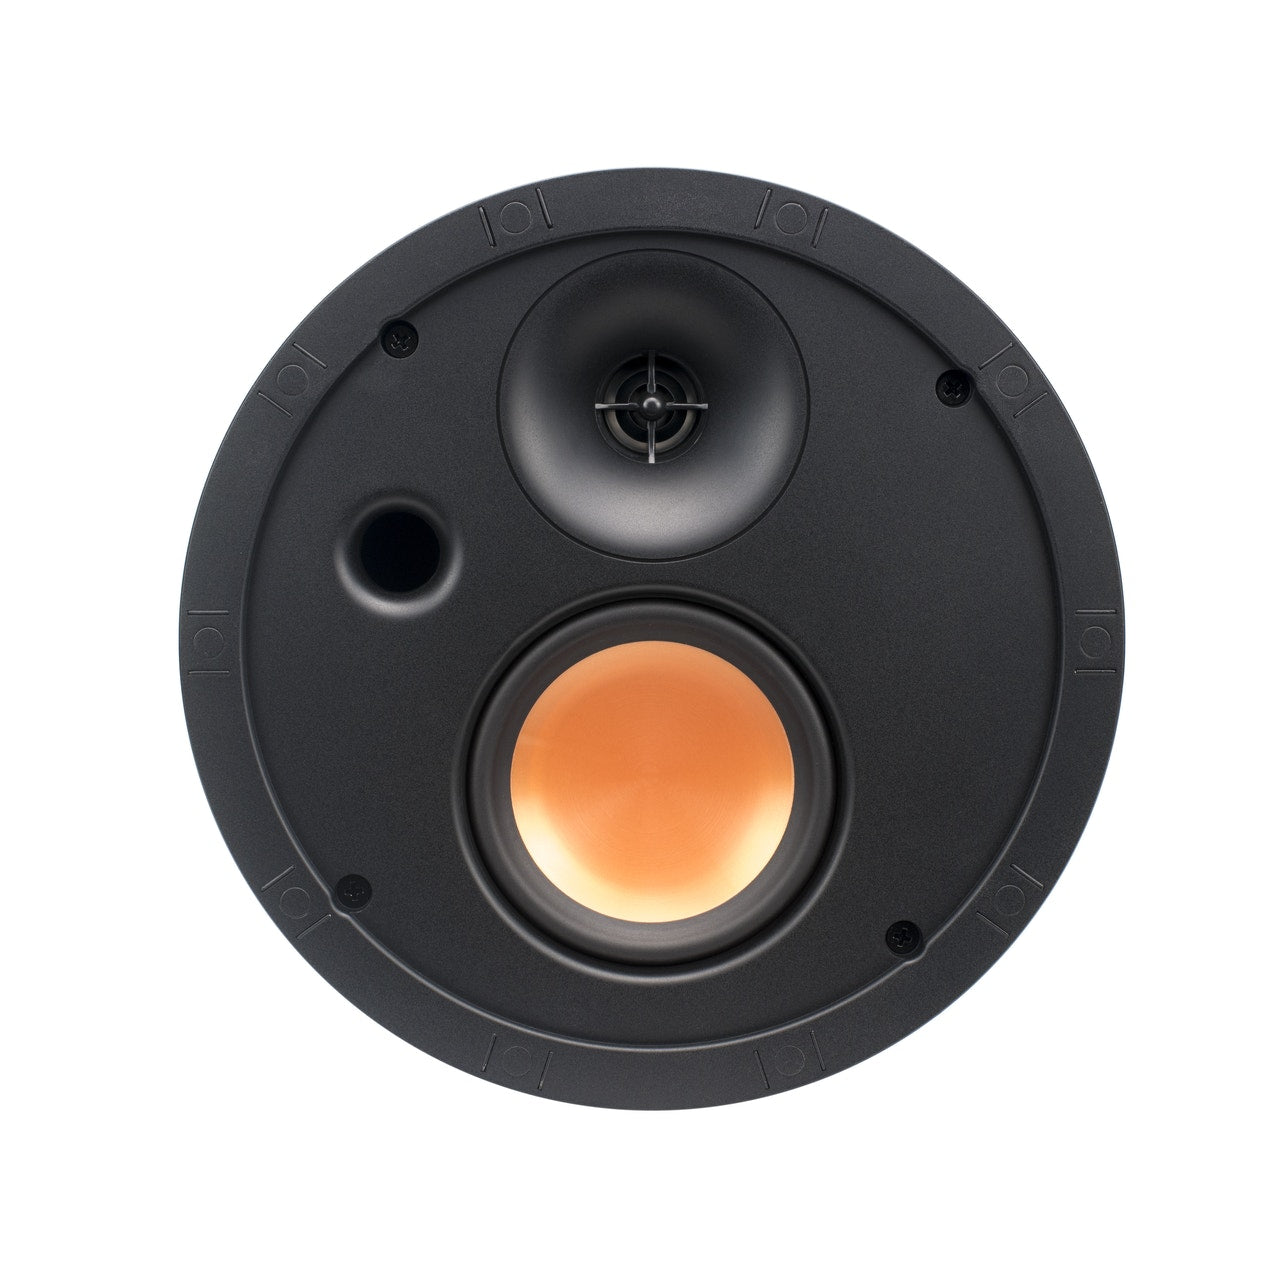 Klipsch SLM-5400-C In-Ceiling Speaker